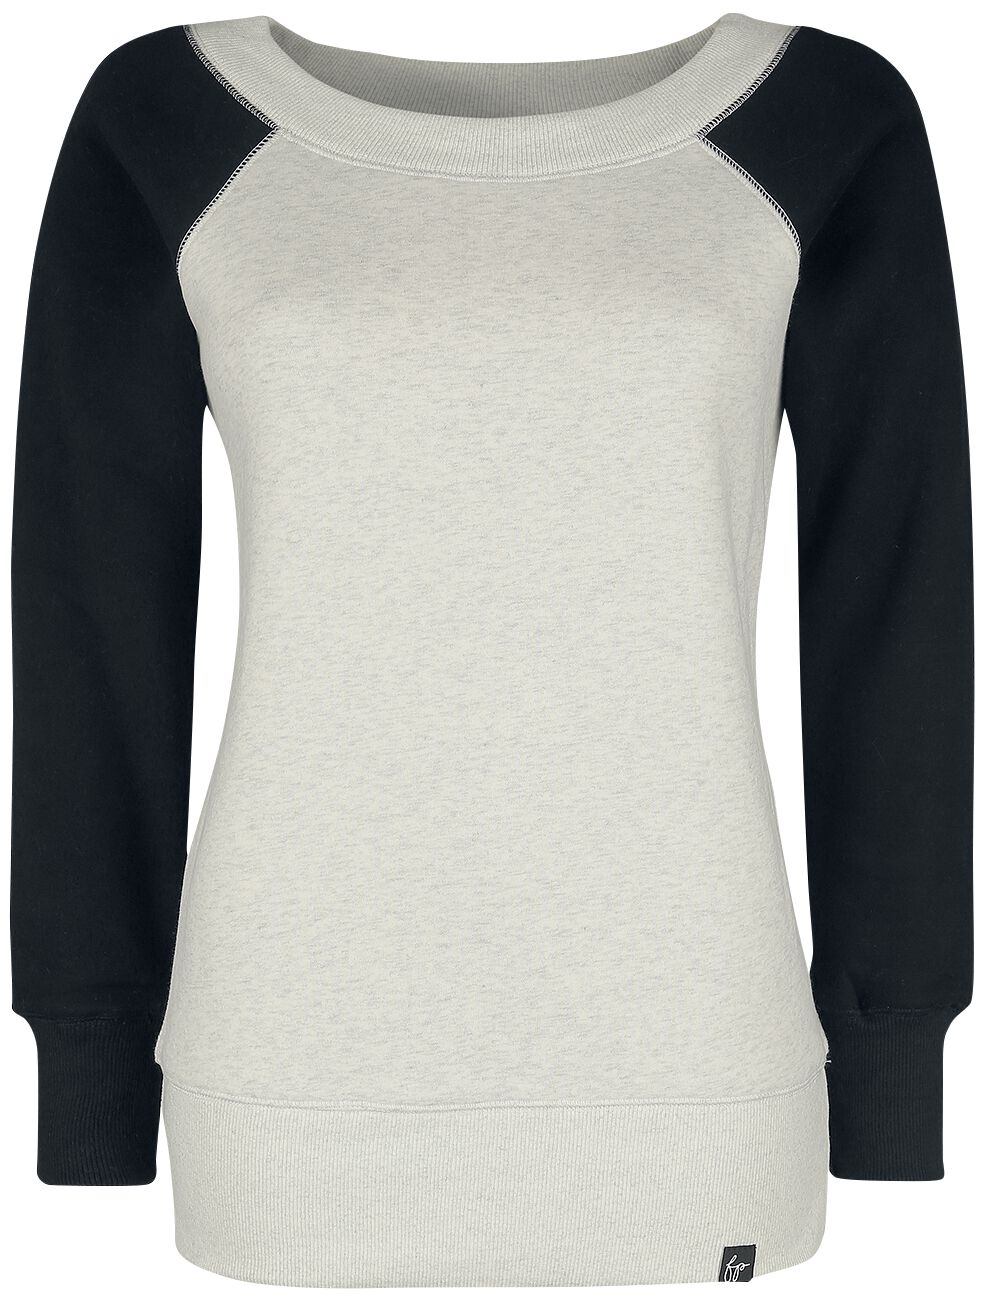 Forplay Yuki Sweatshirt grau meliert schwarz in XL